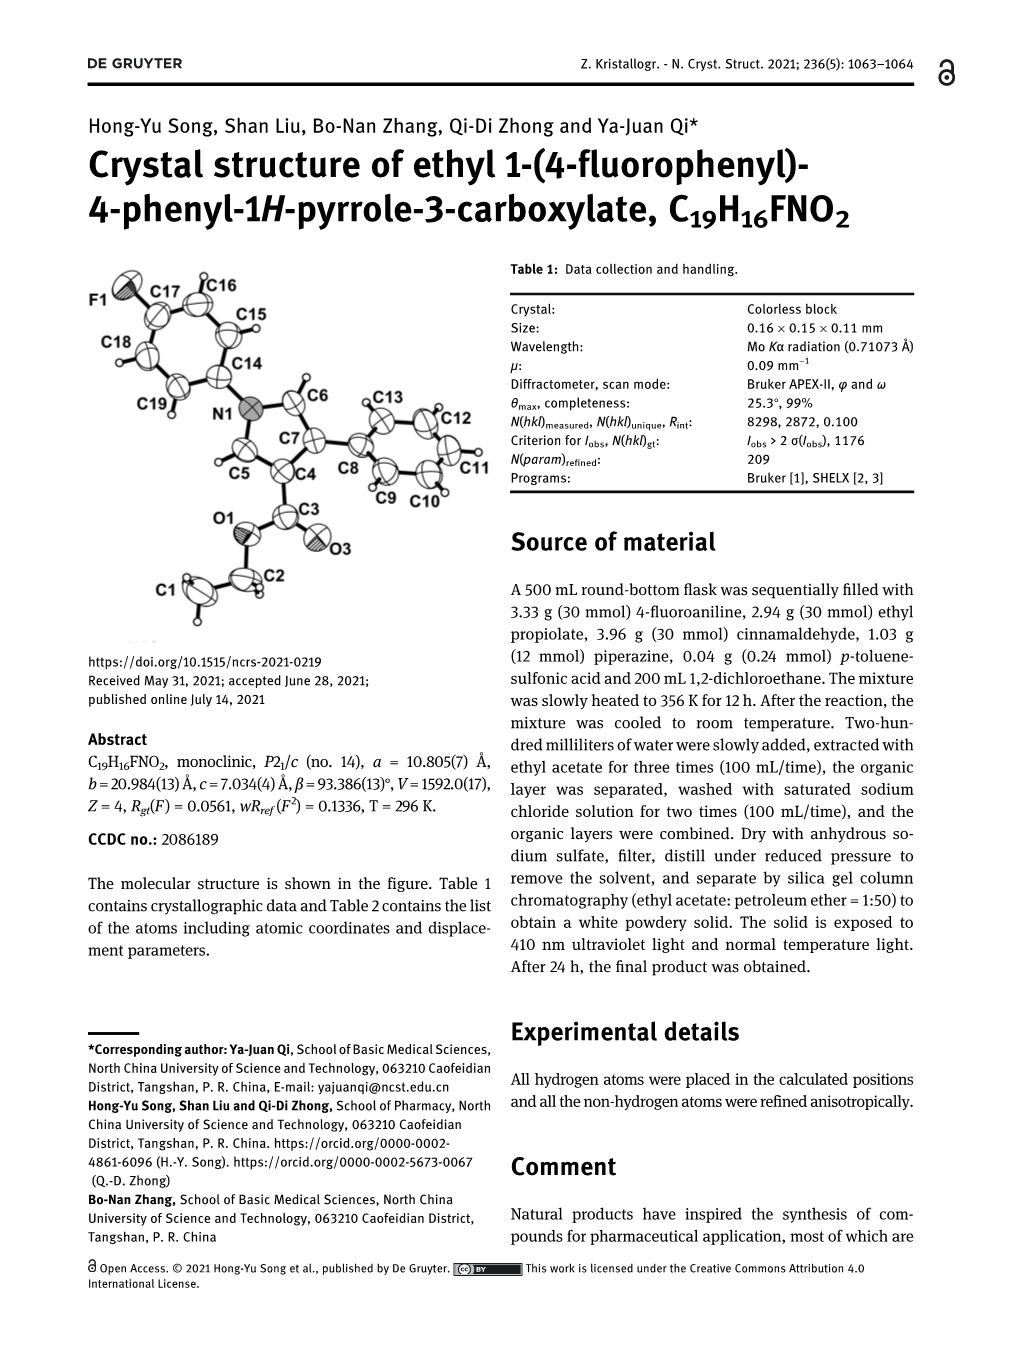 Crystal Structure of Ethyl 1-(4-Fluorophenyl)-4-Phenyl-1H